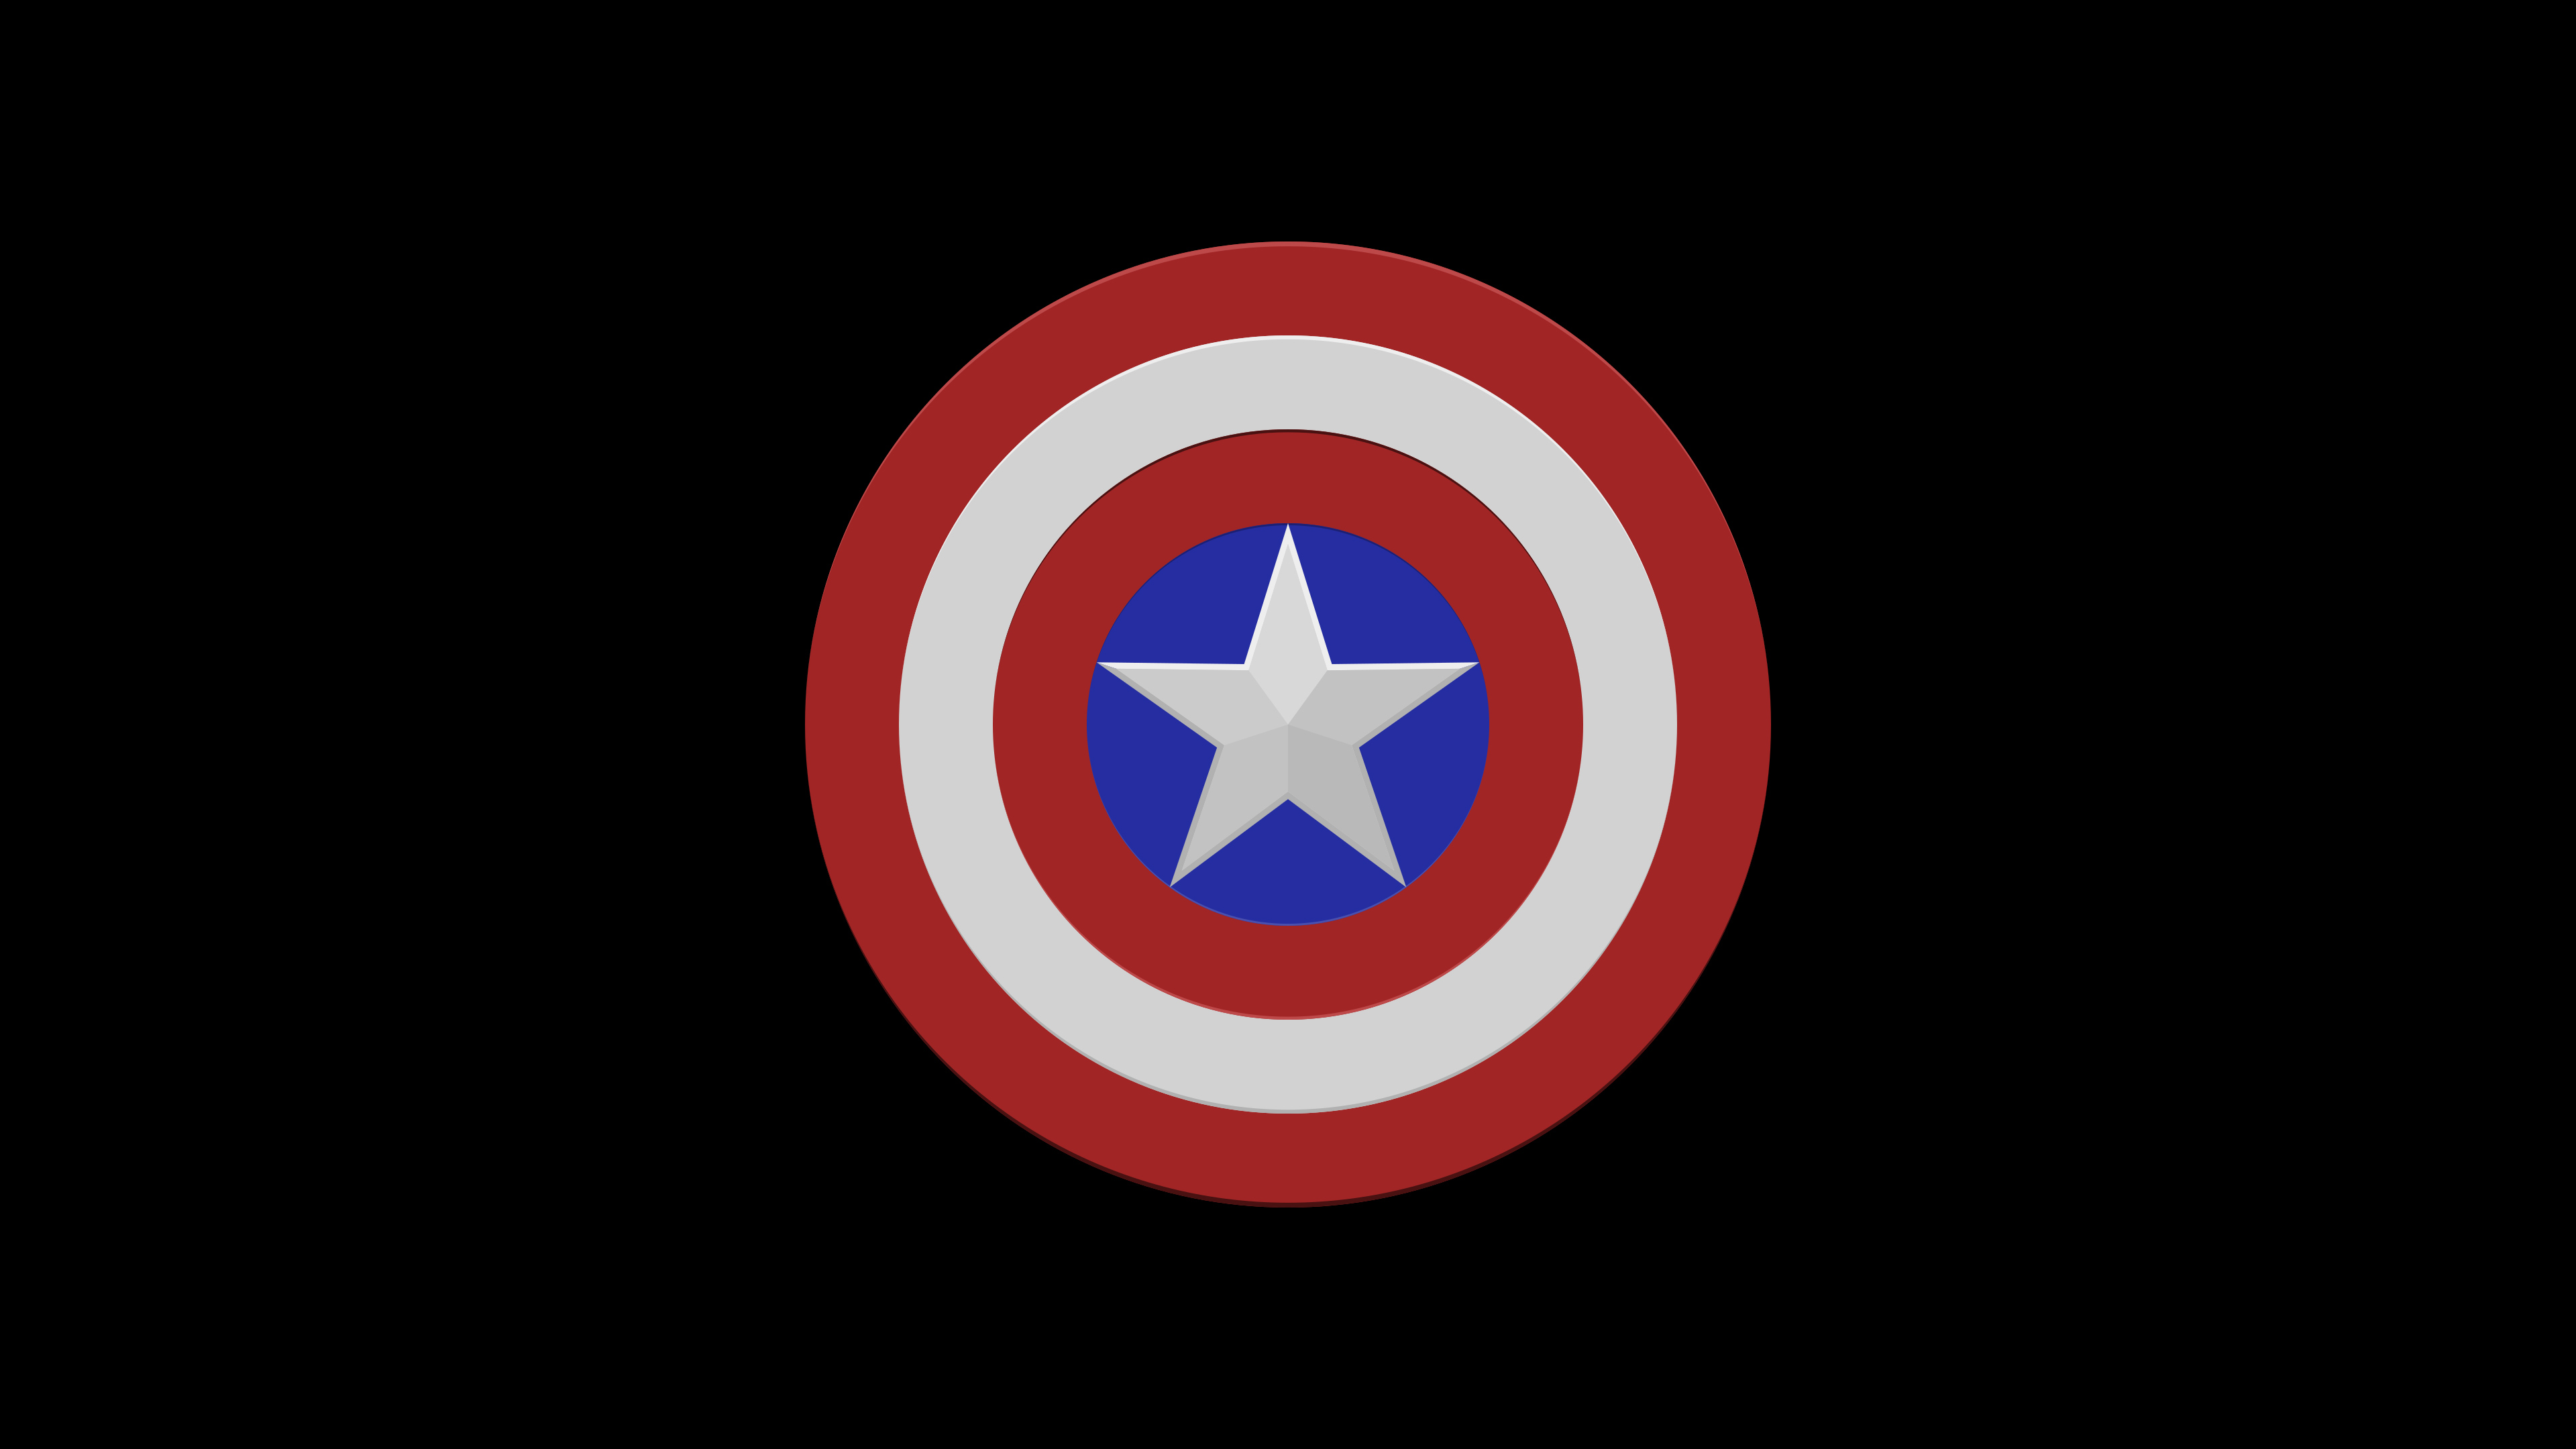 captain america shield dark 1570918475 - Captain America Shield Dark - superheroes wallpapers, hd-wallpapers, deviantart wallpapers, captain america wallpapers, 4k-wallpapers